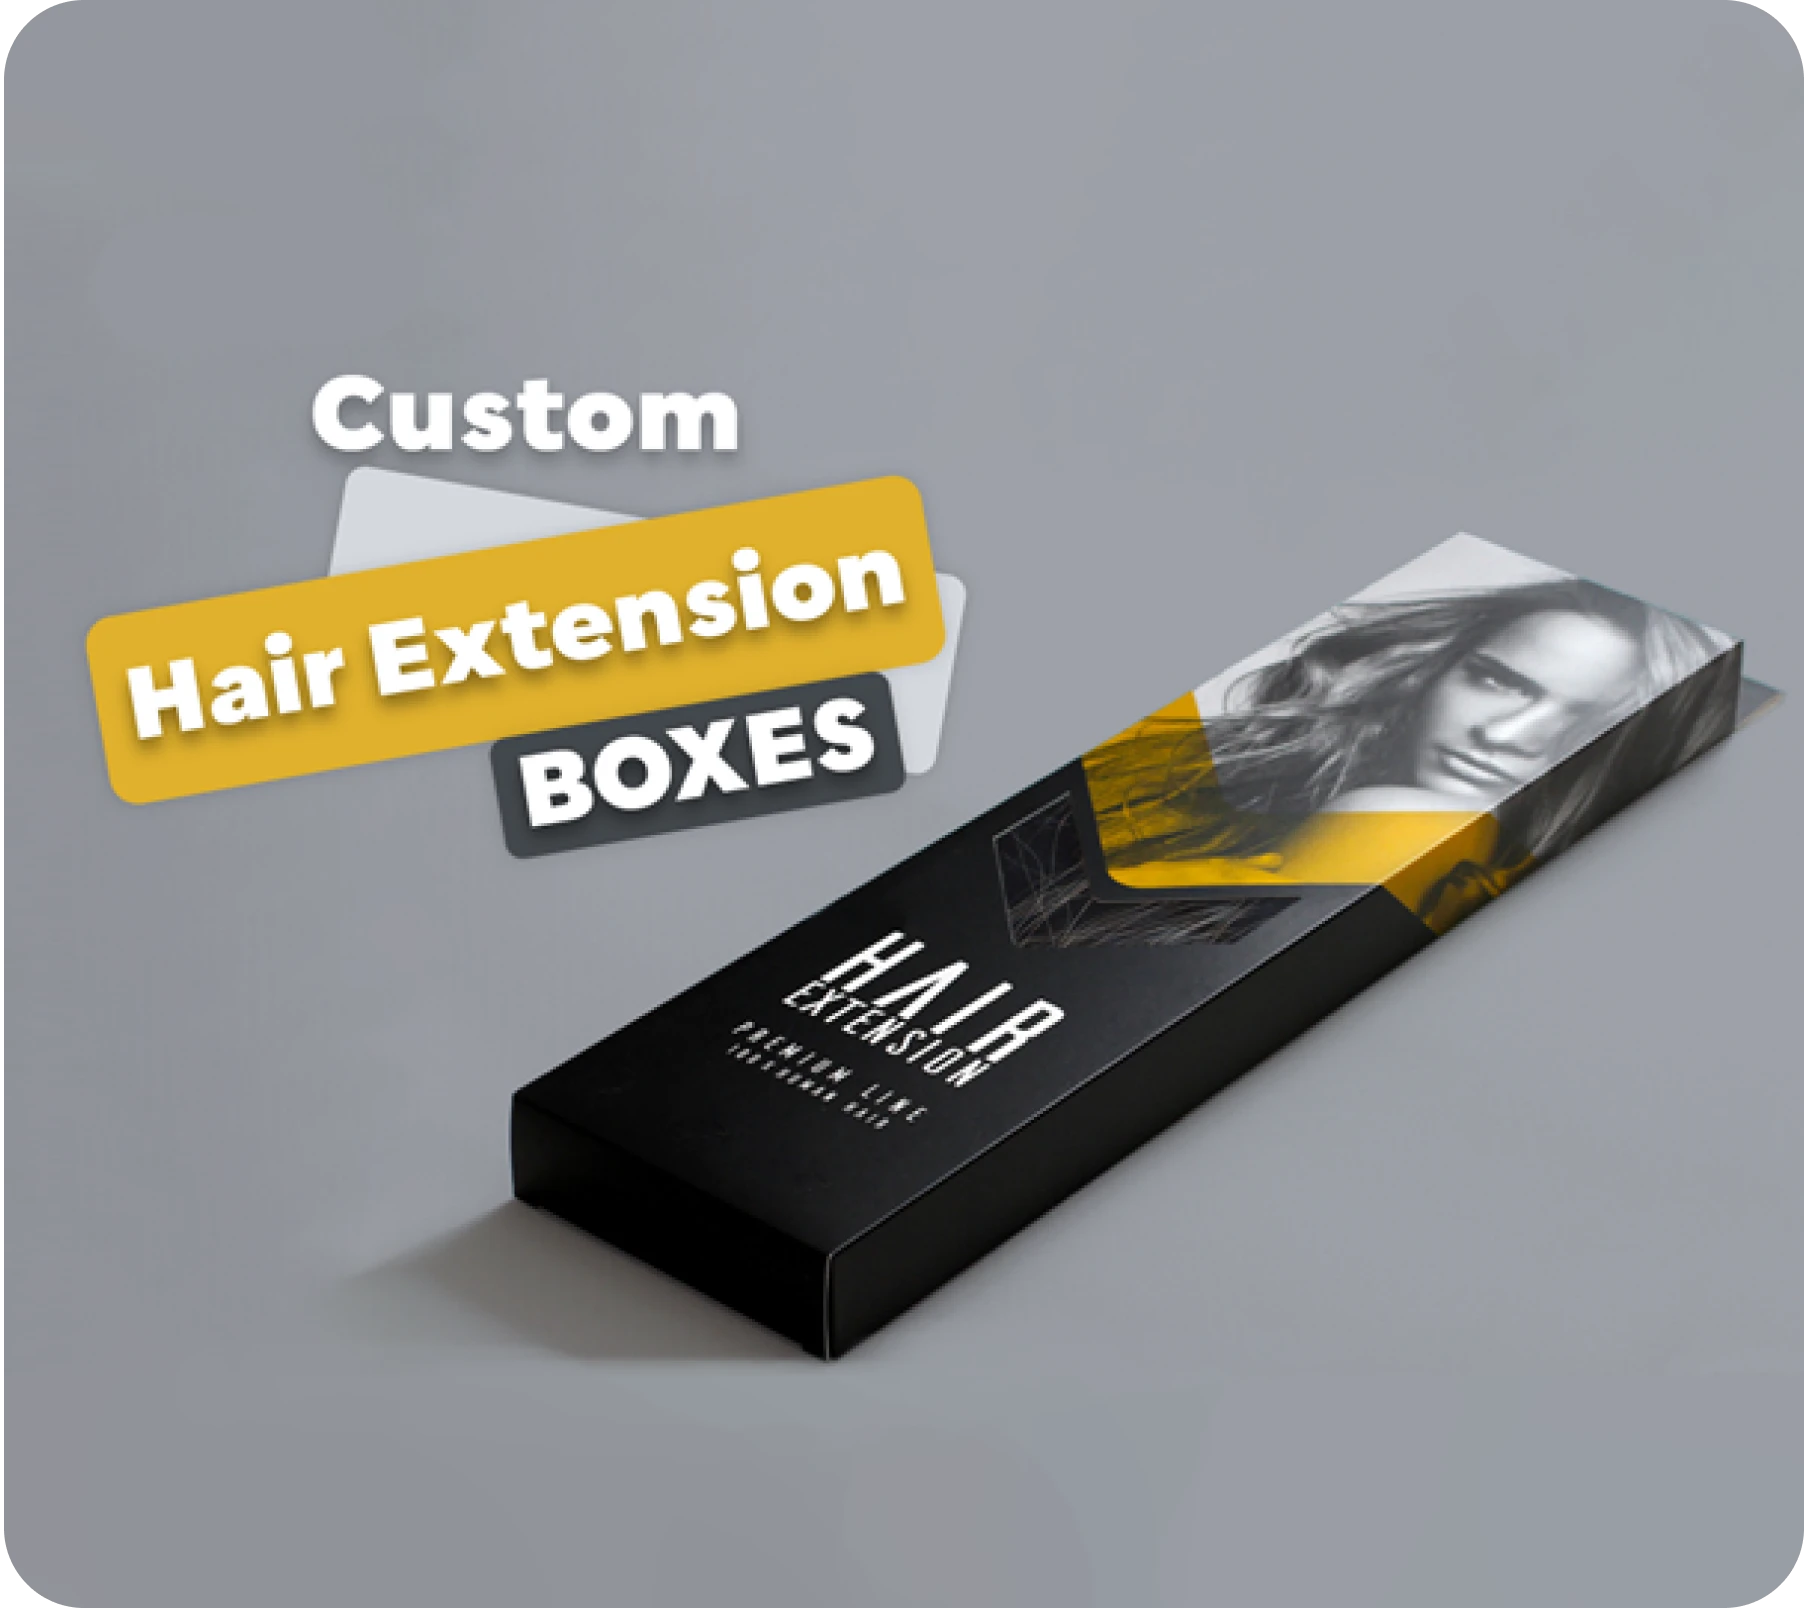 Choose The Box Lane for Hair Extension Boxes | The Box Lane